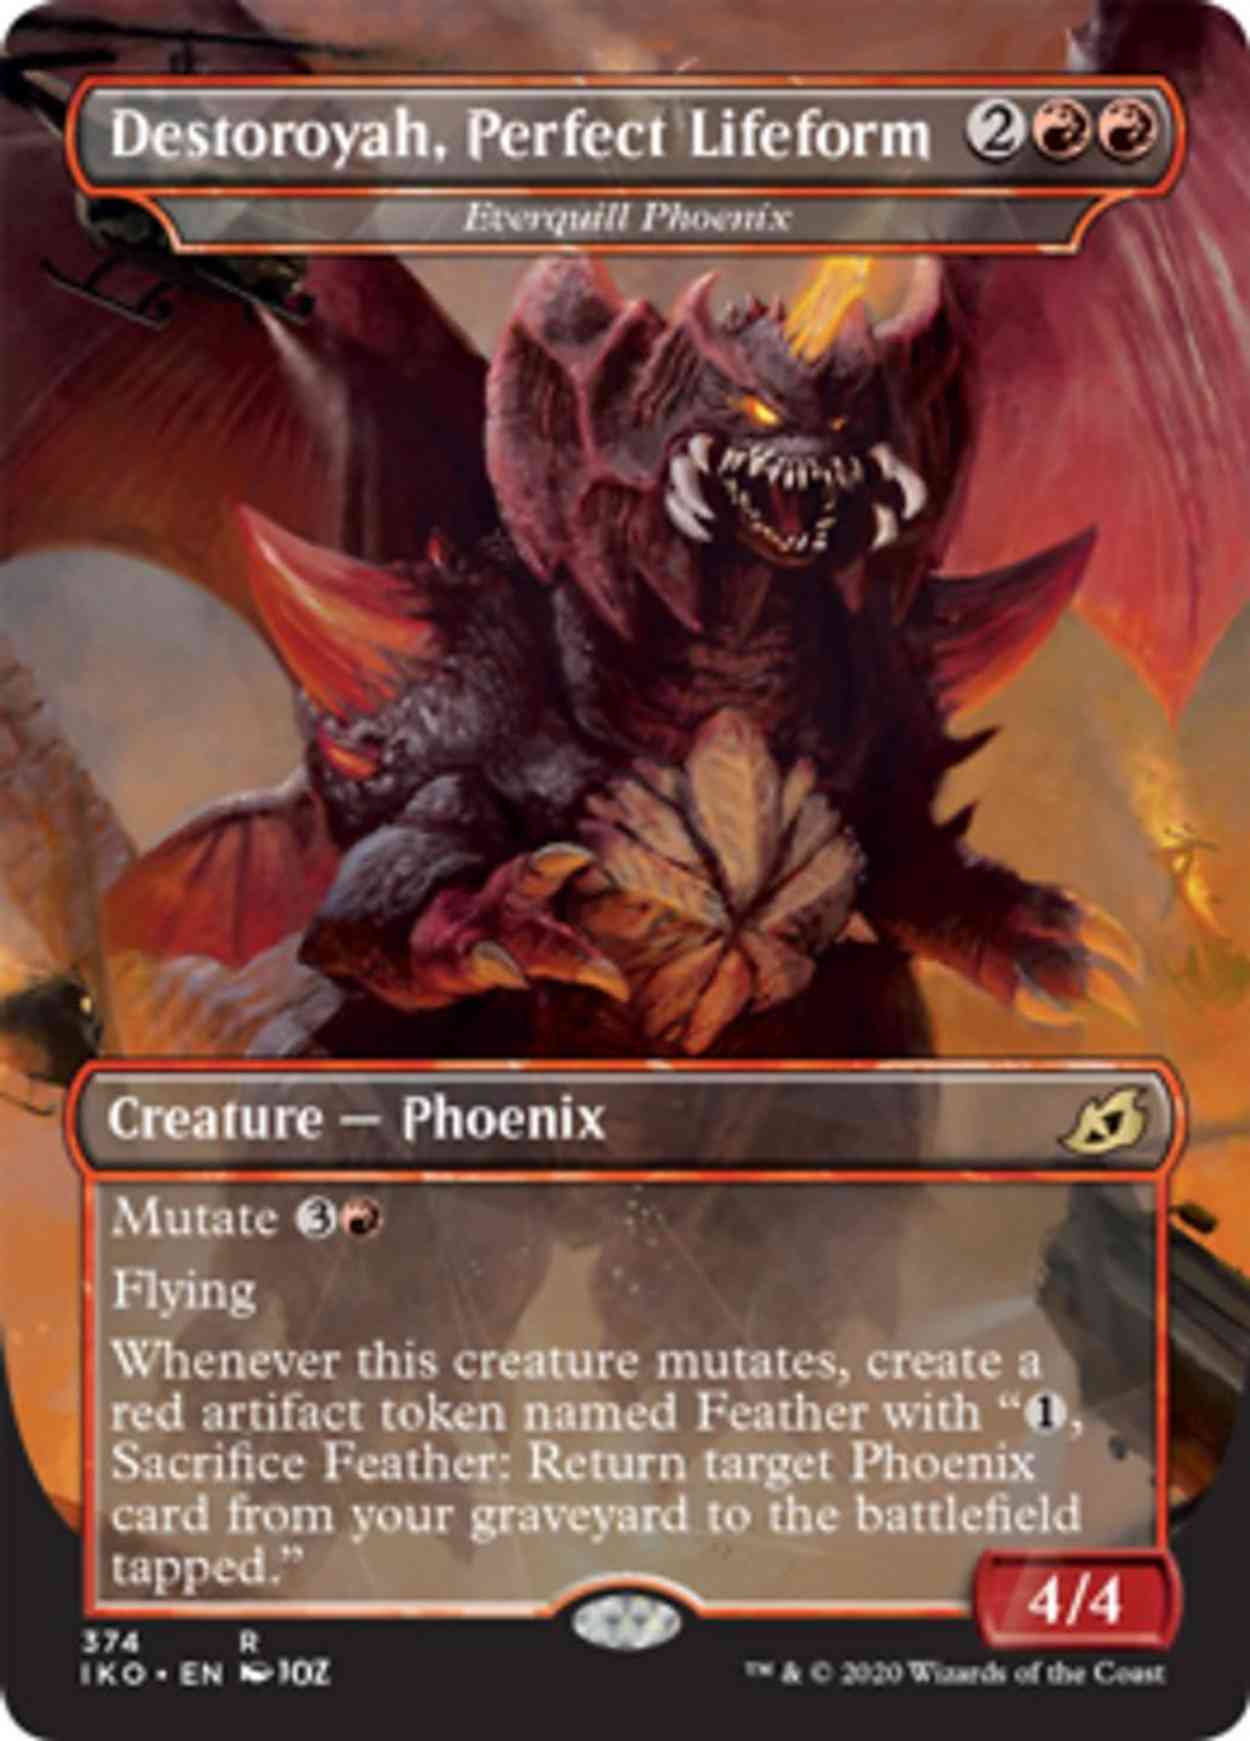 Destoroyah, Perfect Lifeform - Everquill Phoenix magic card front